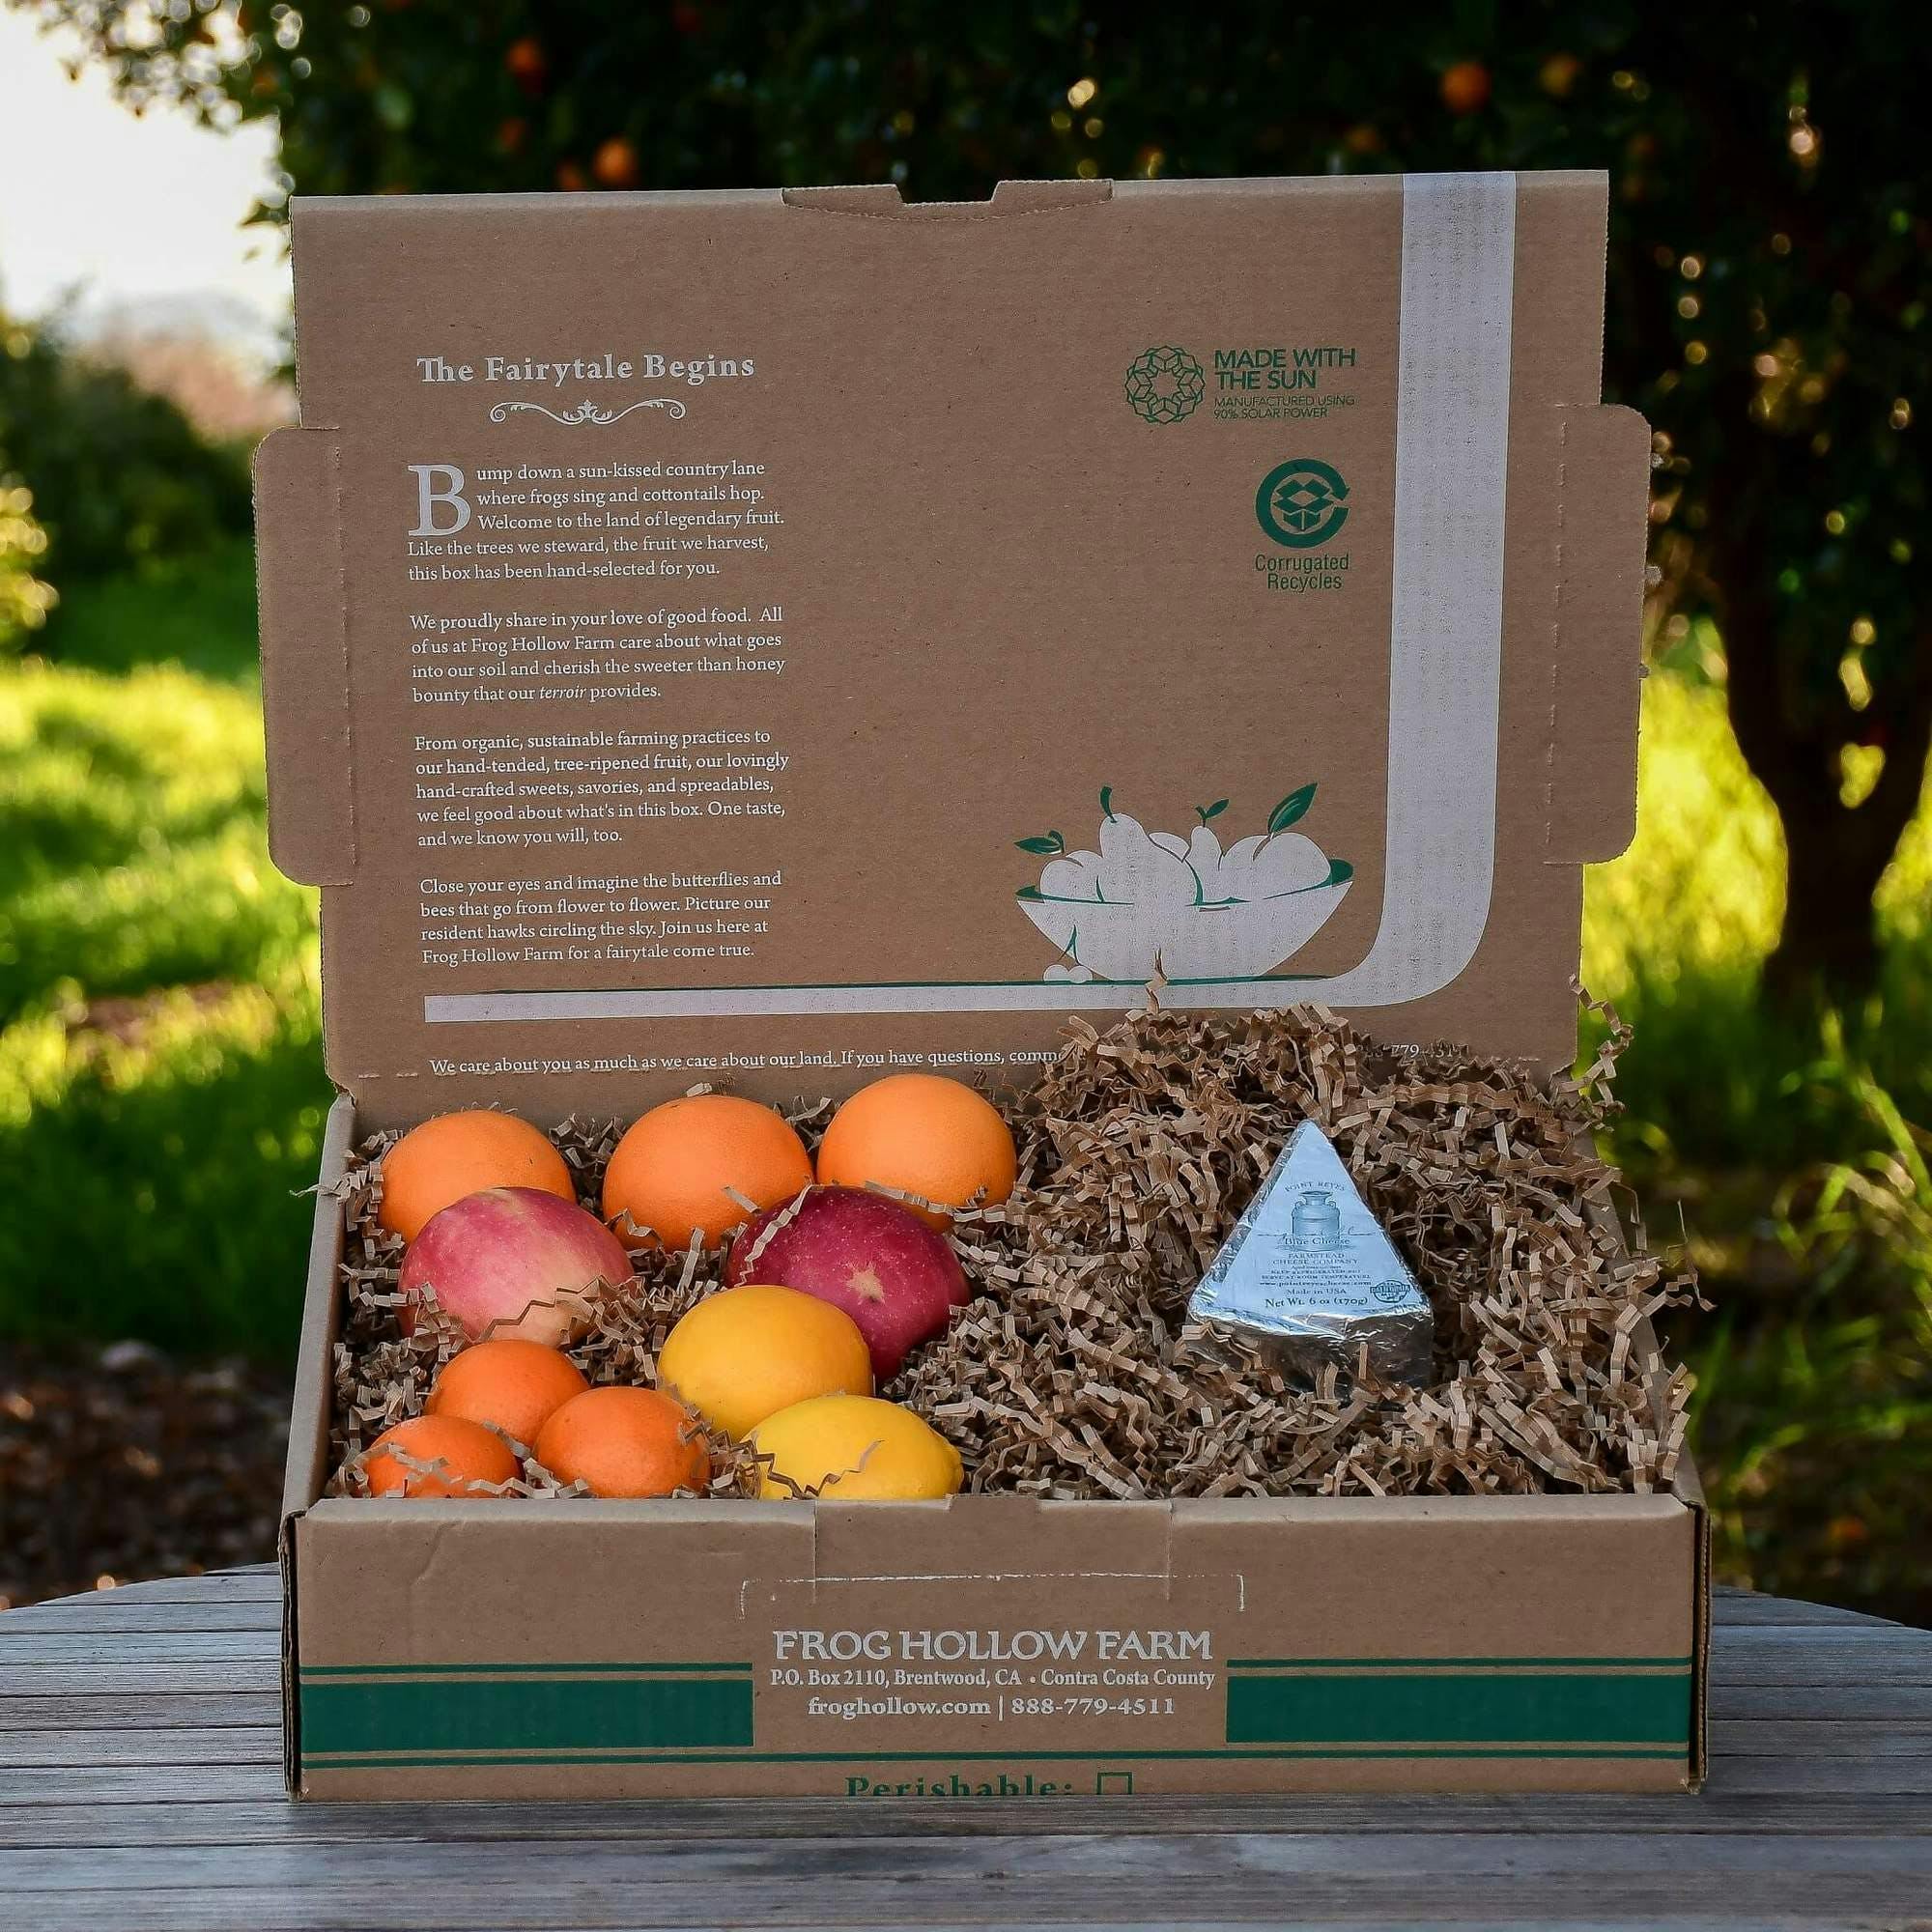 Pure & Fresh, Brand Identity, Organic Fruit Farm